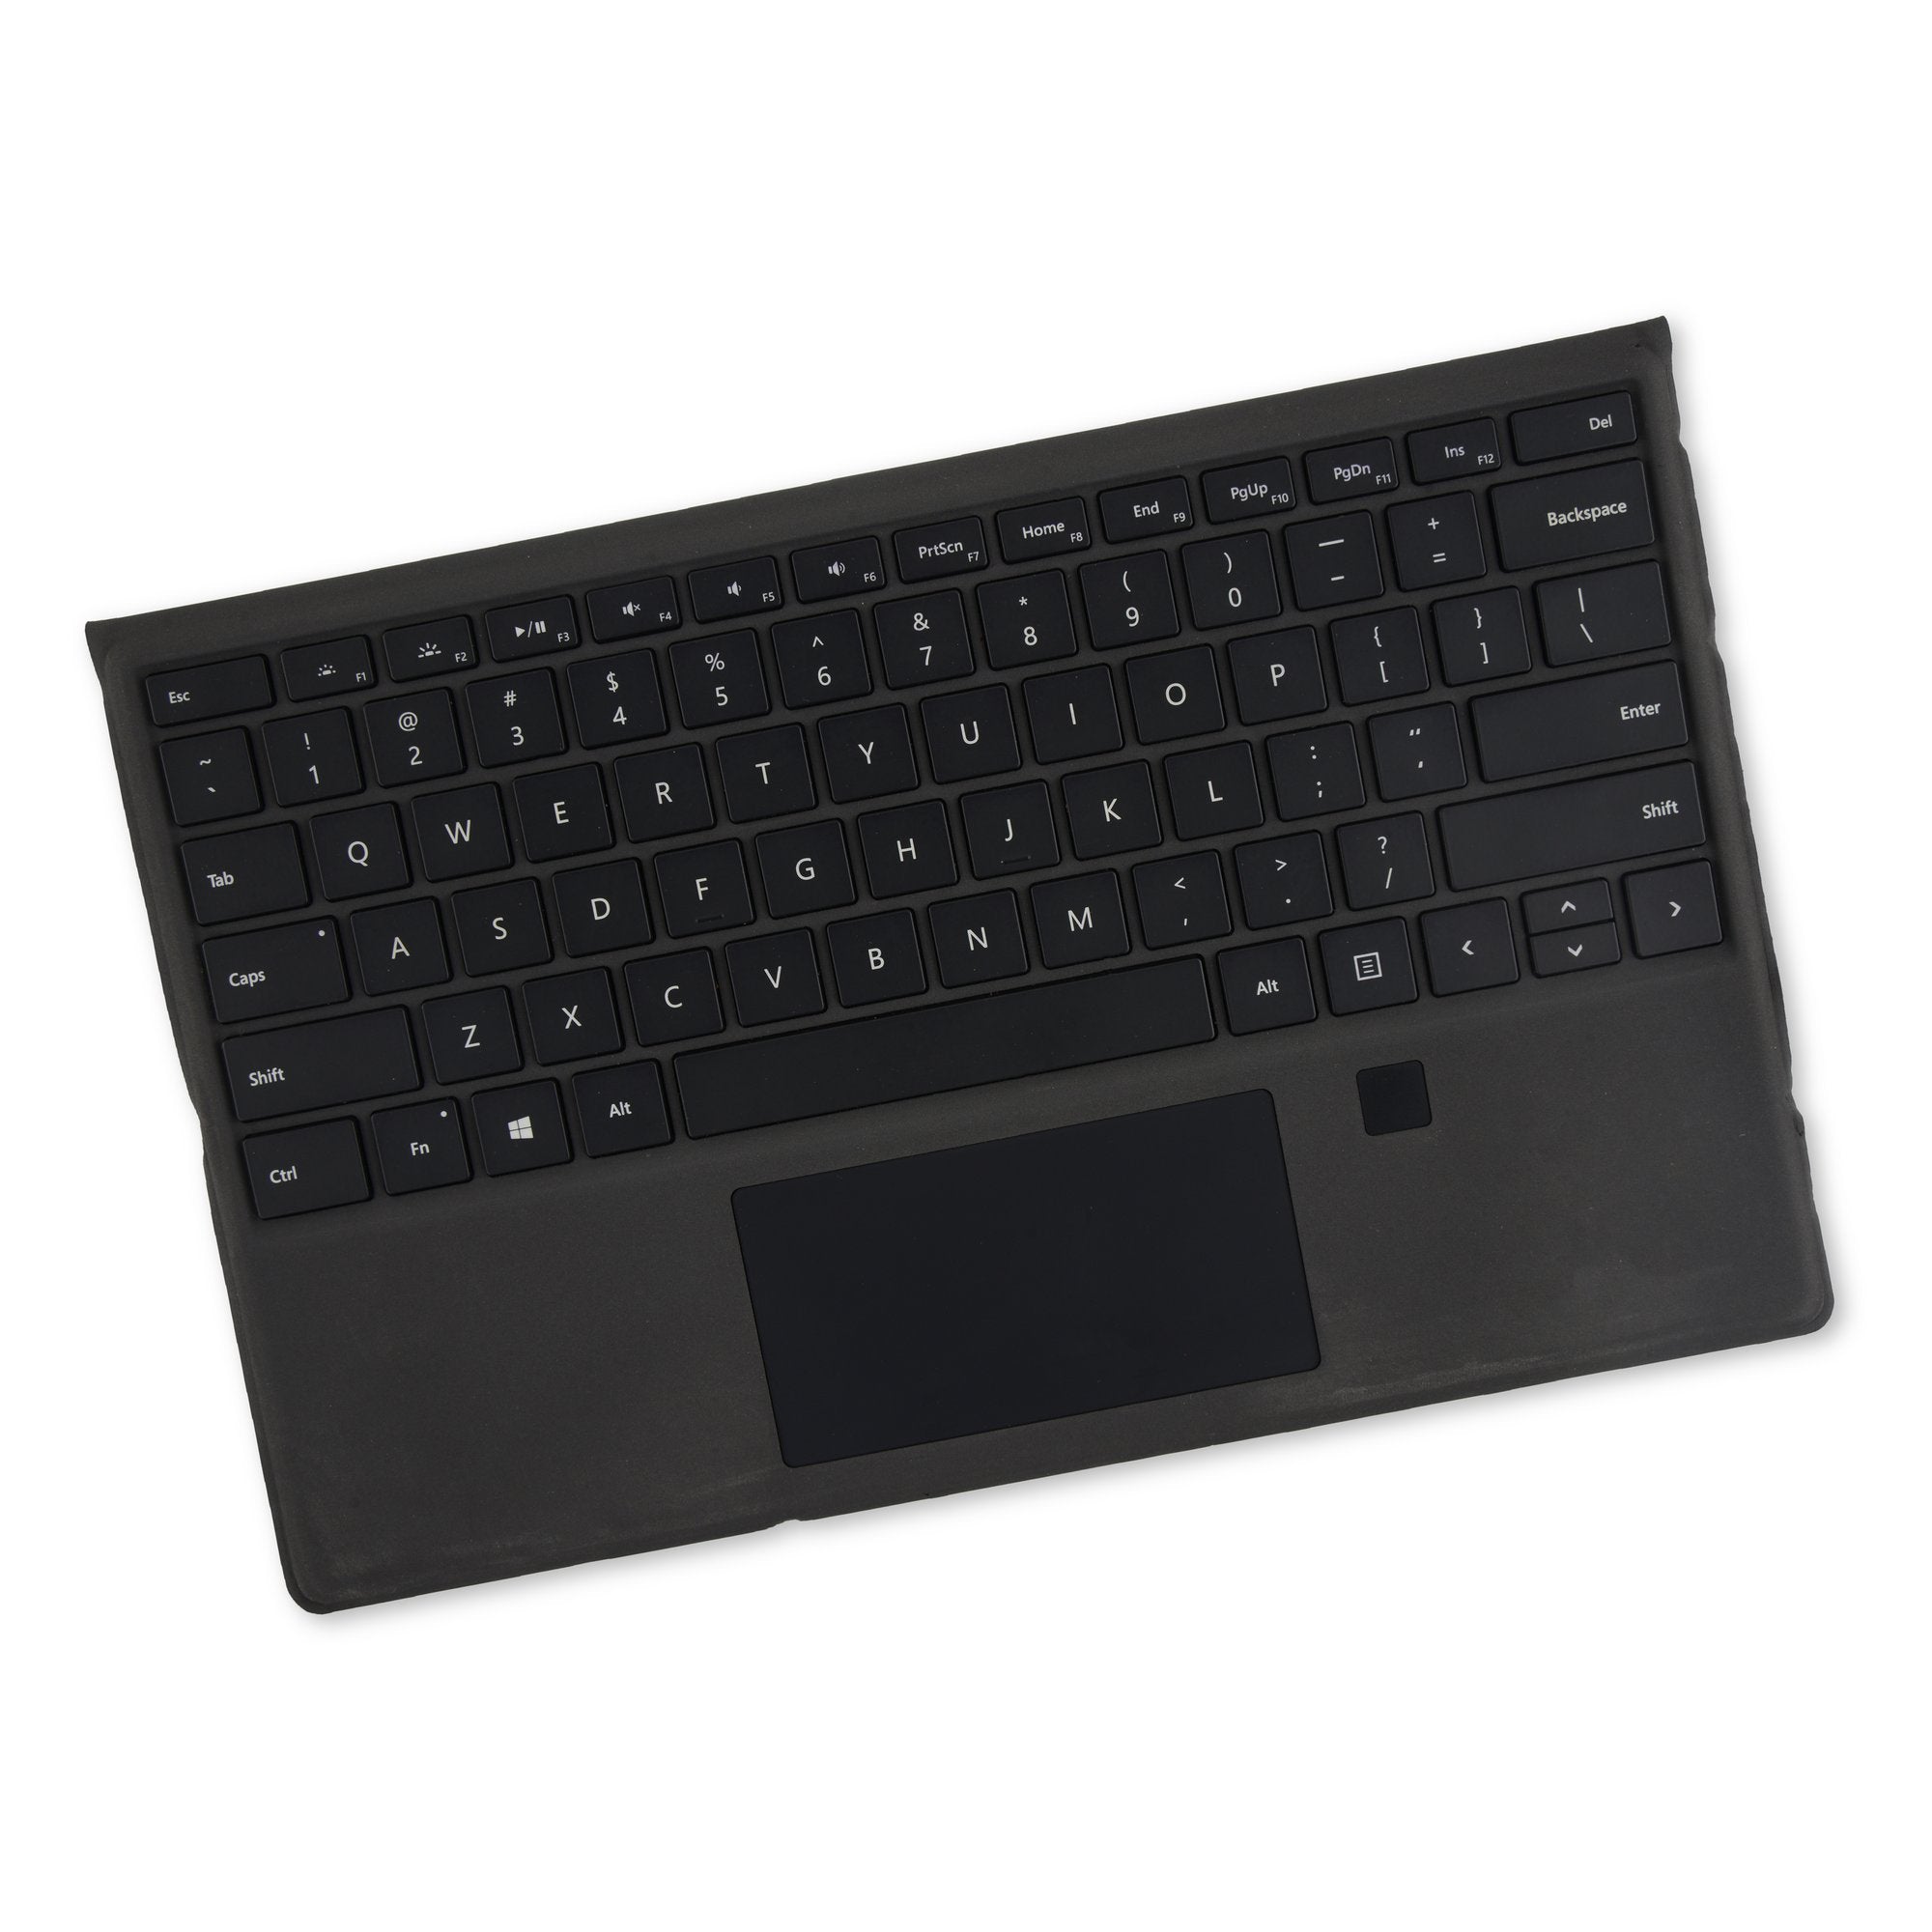 Surface Pro 4 Keyboard with Fingerprint Sensor